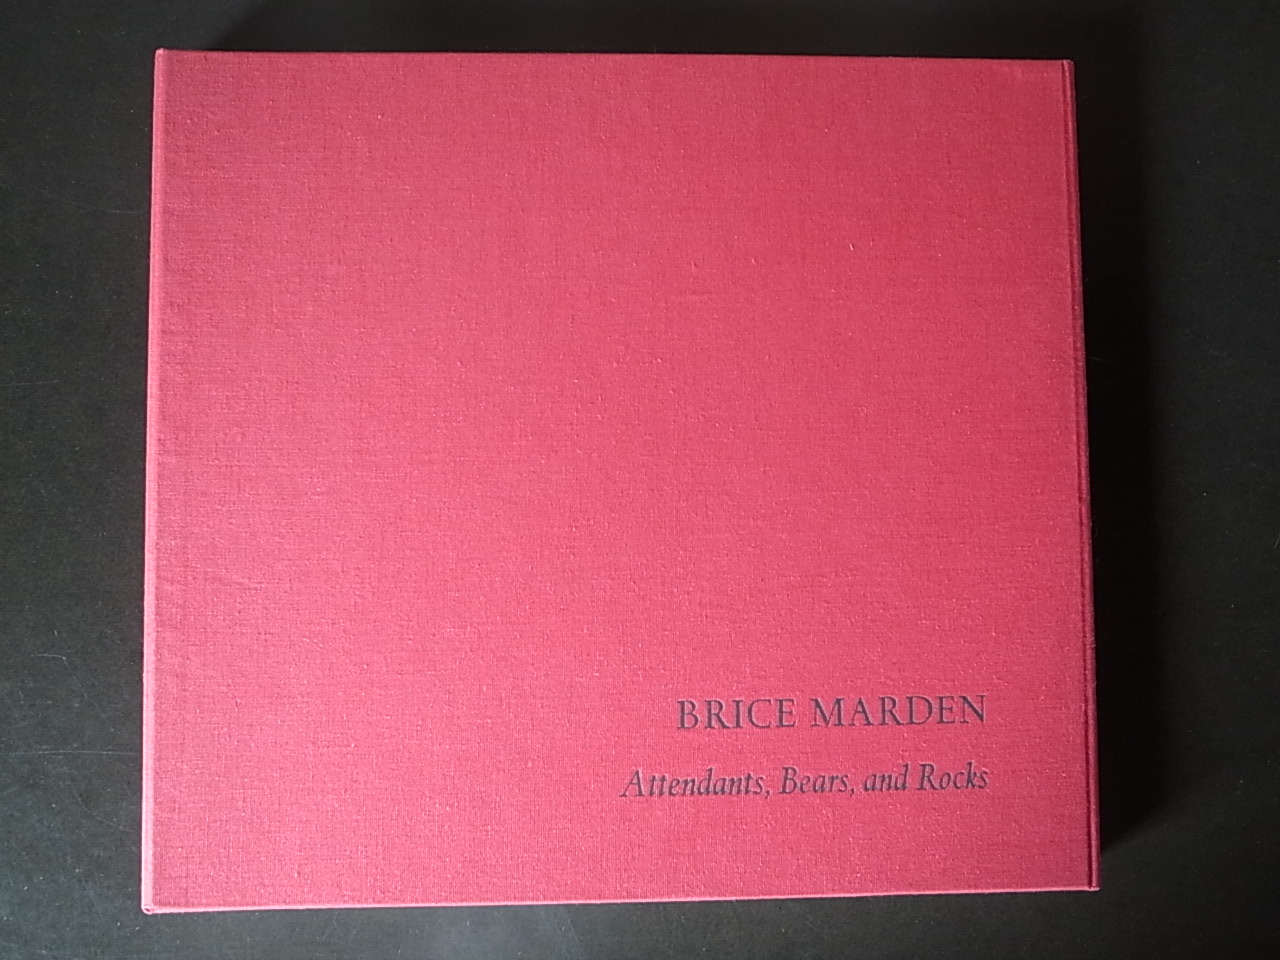 BRICE MARDEN ATTENDANTS, BEARS, AND ROCKS / Matthew Marks Gallery